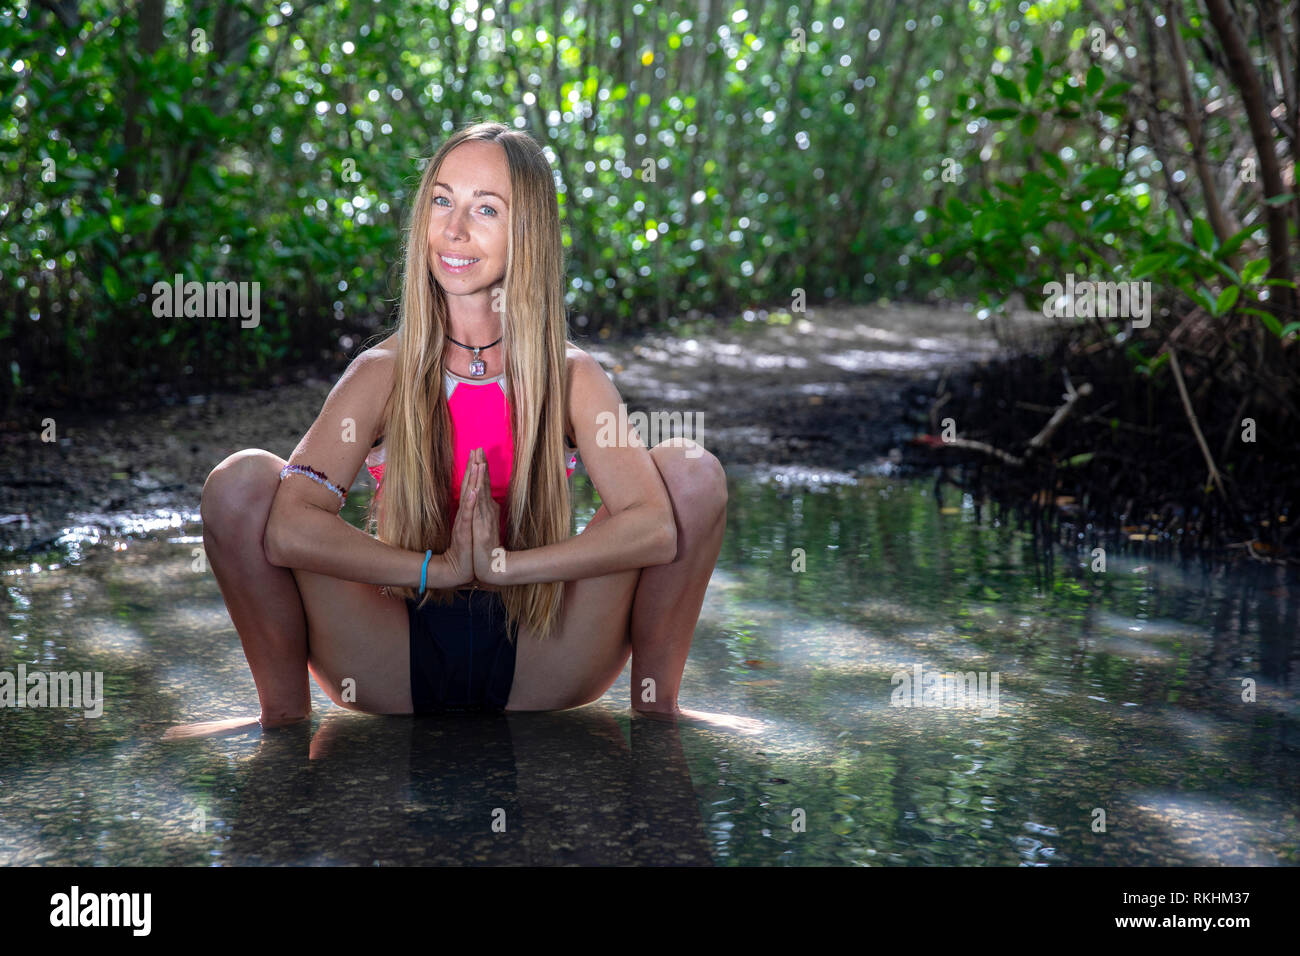 Young woman practicing yoga (Garland poser - Malasana) dans un cadre naturel - Fort Lauderdale, Floride, USA Banque D'Images